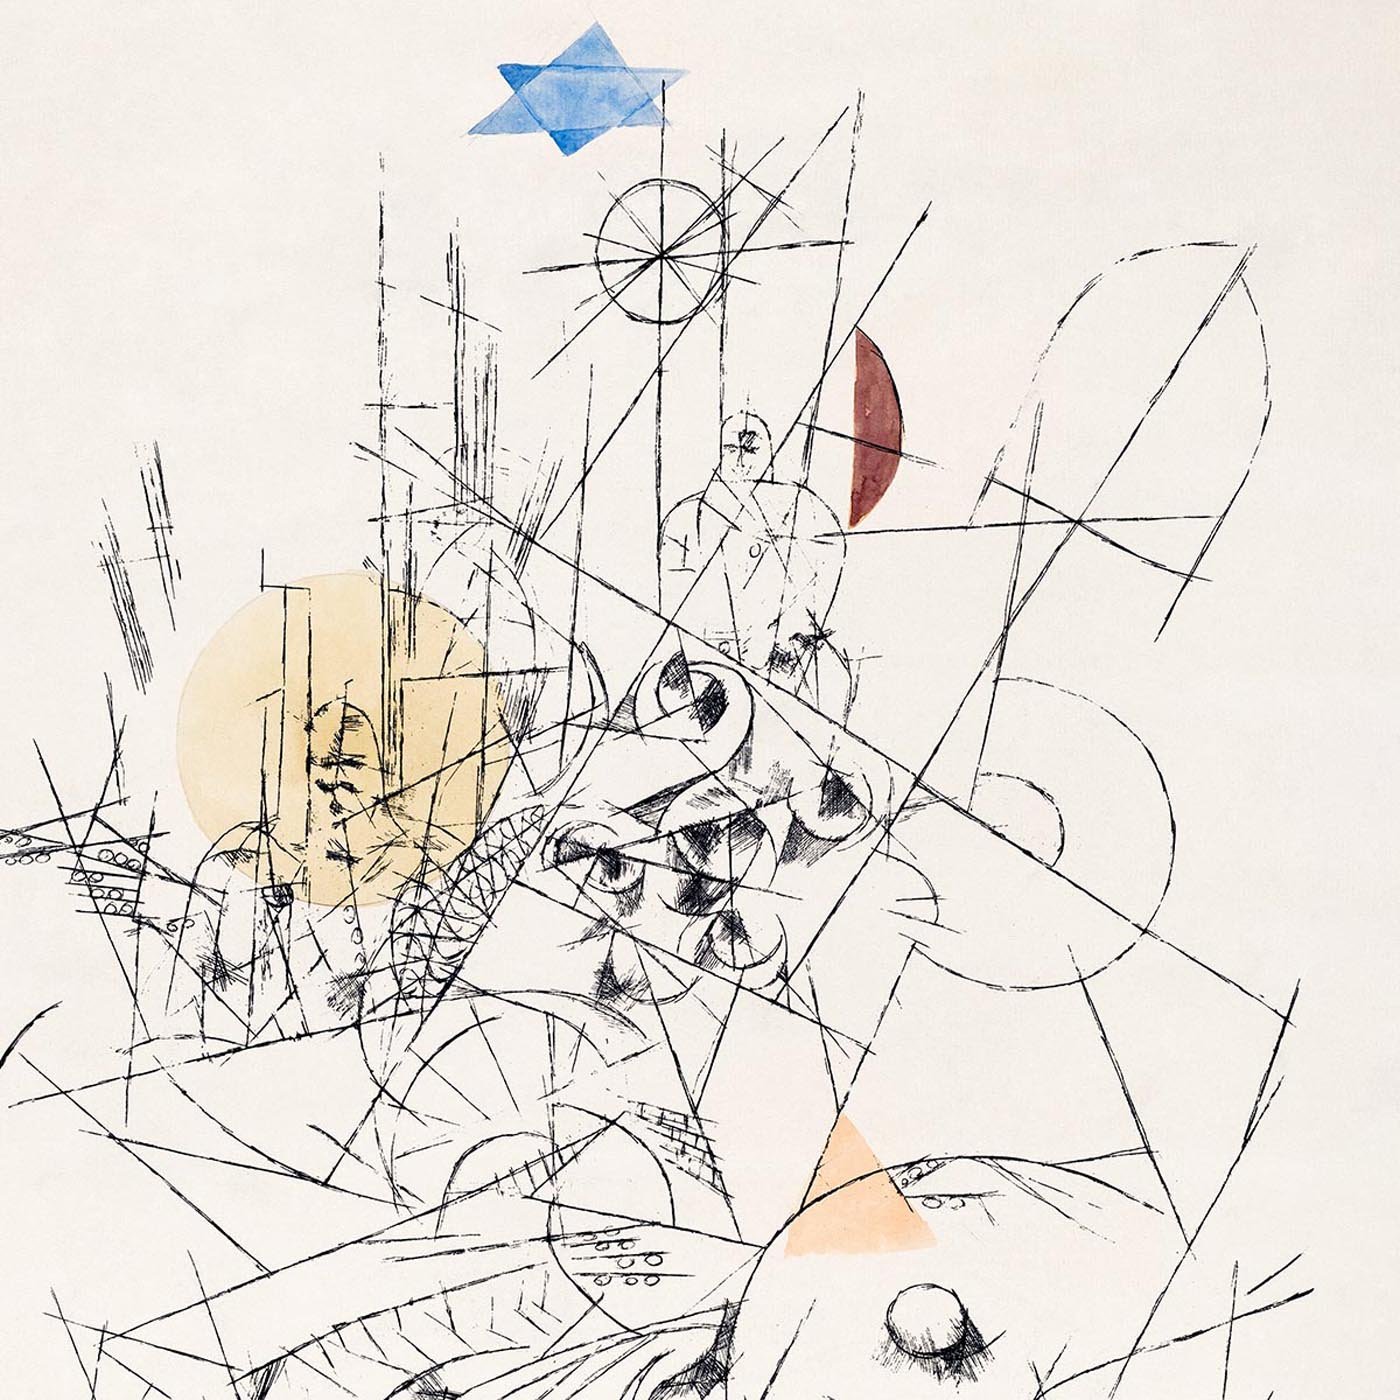 Paul Klee Hope and Destruction Art Exhibition Poster